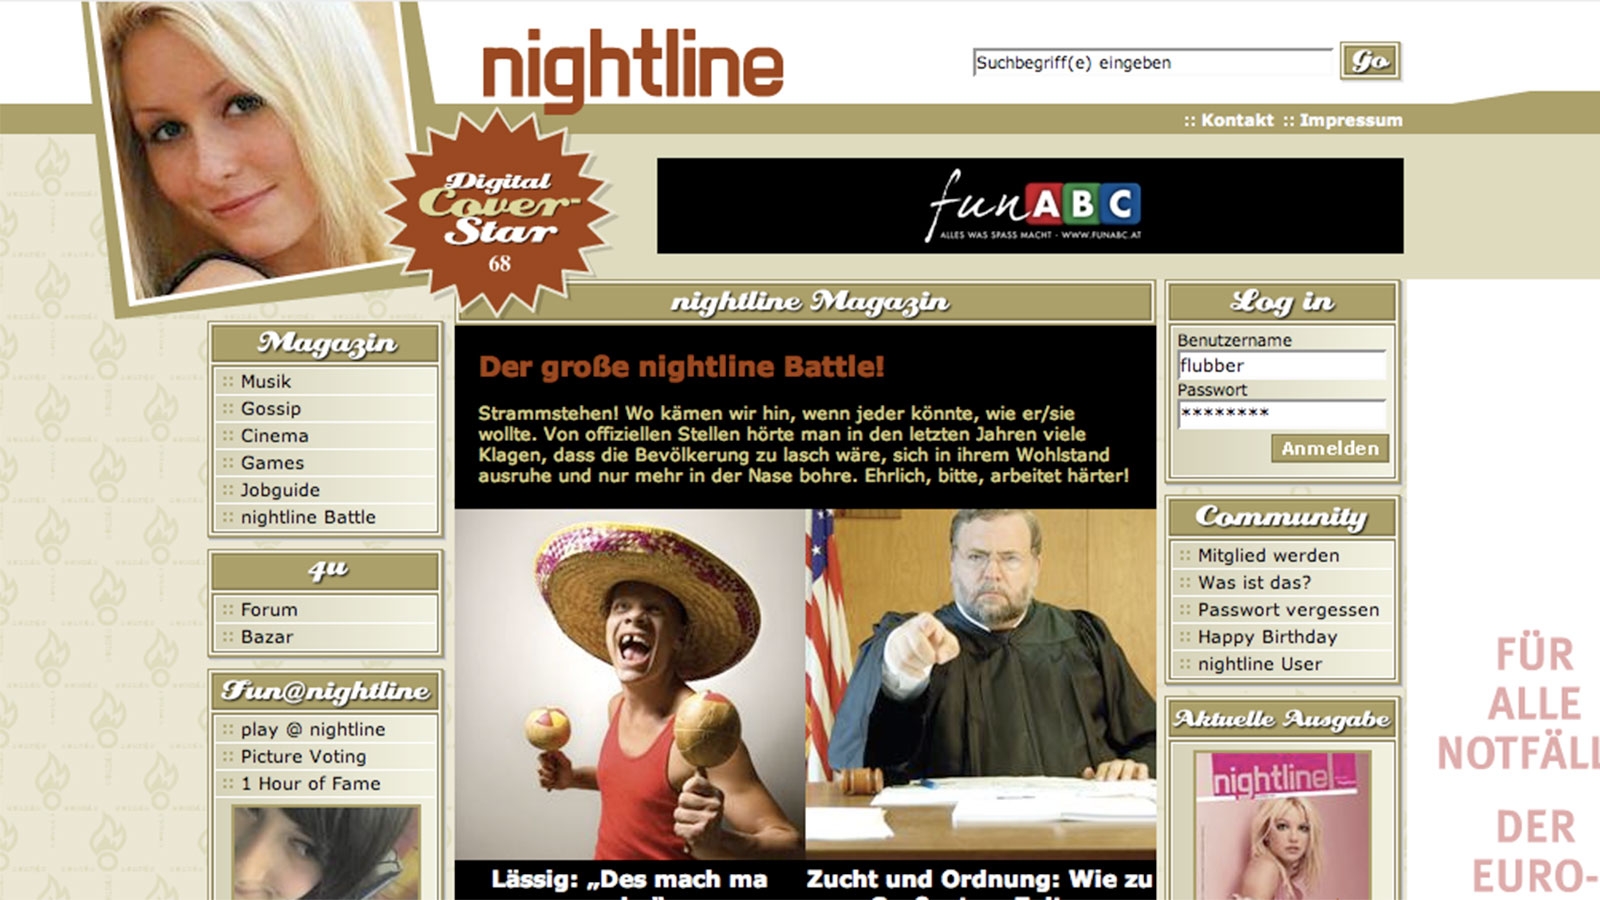 Nightline | nightline.cc | 2004 (Screen Only 04) © echonet communication